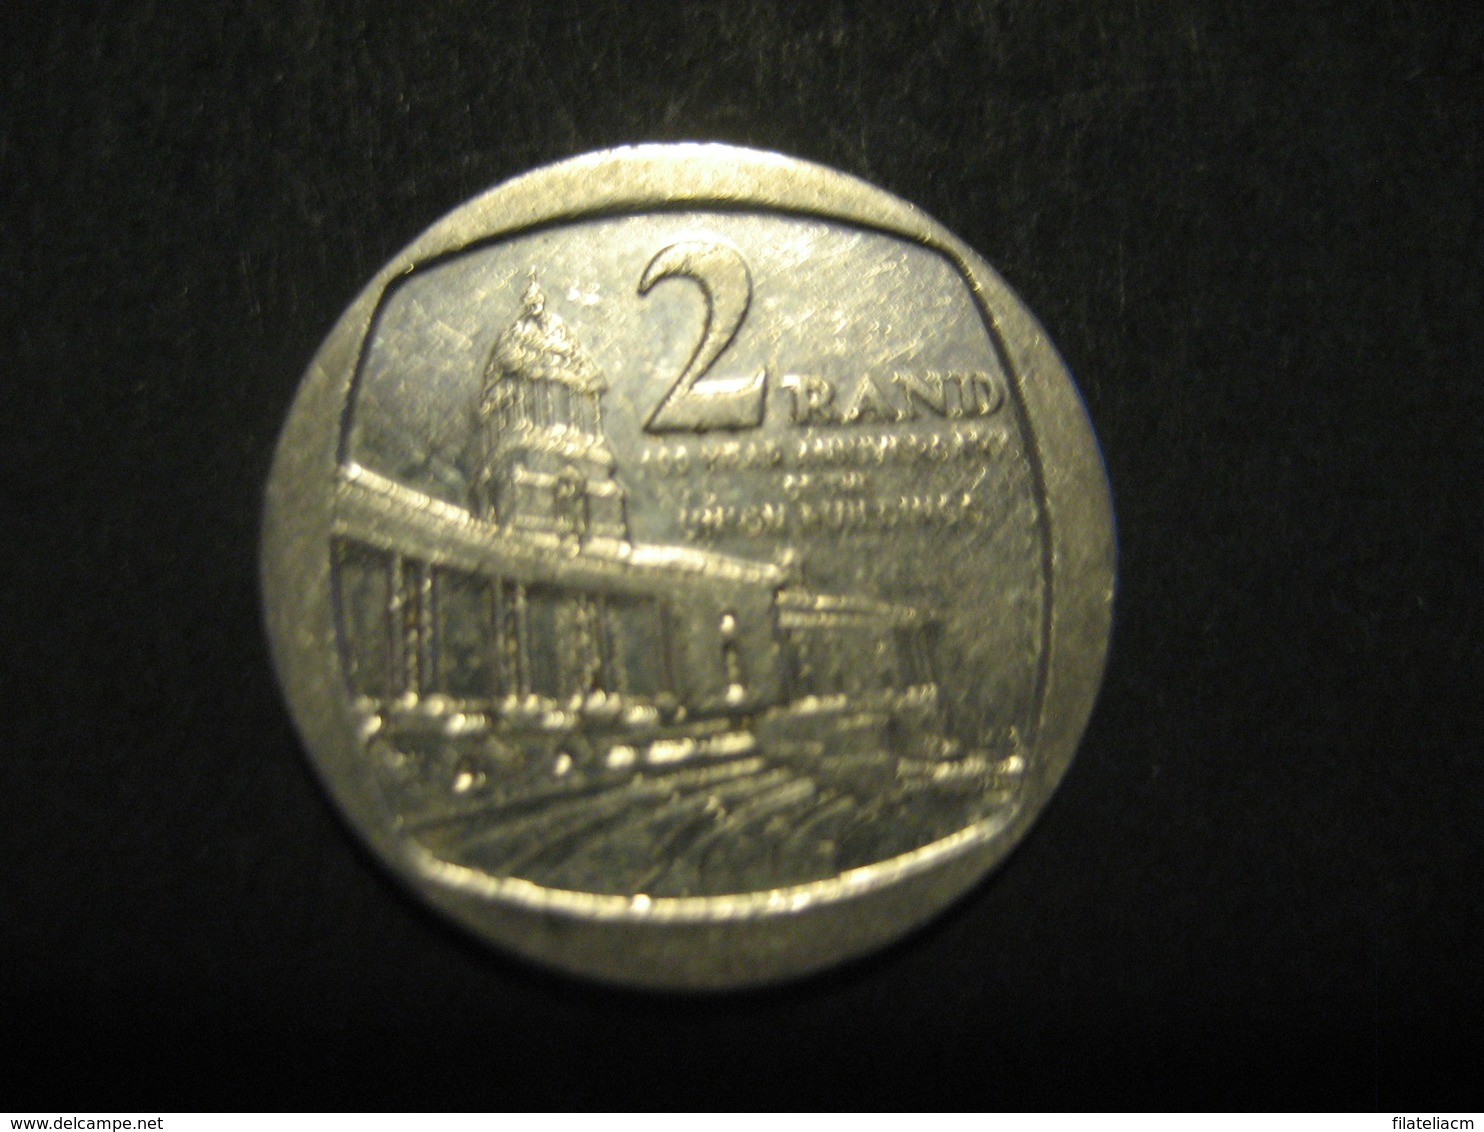 2 RAND South Africa 2013 Coin - Afrique Du Sud